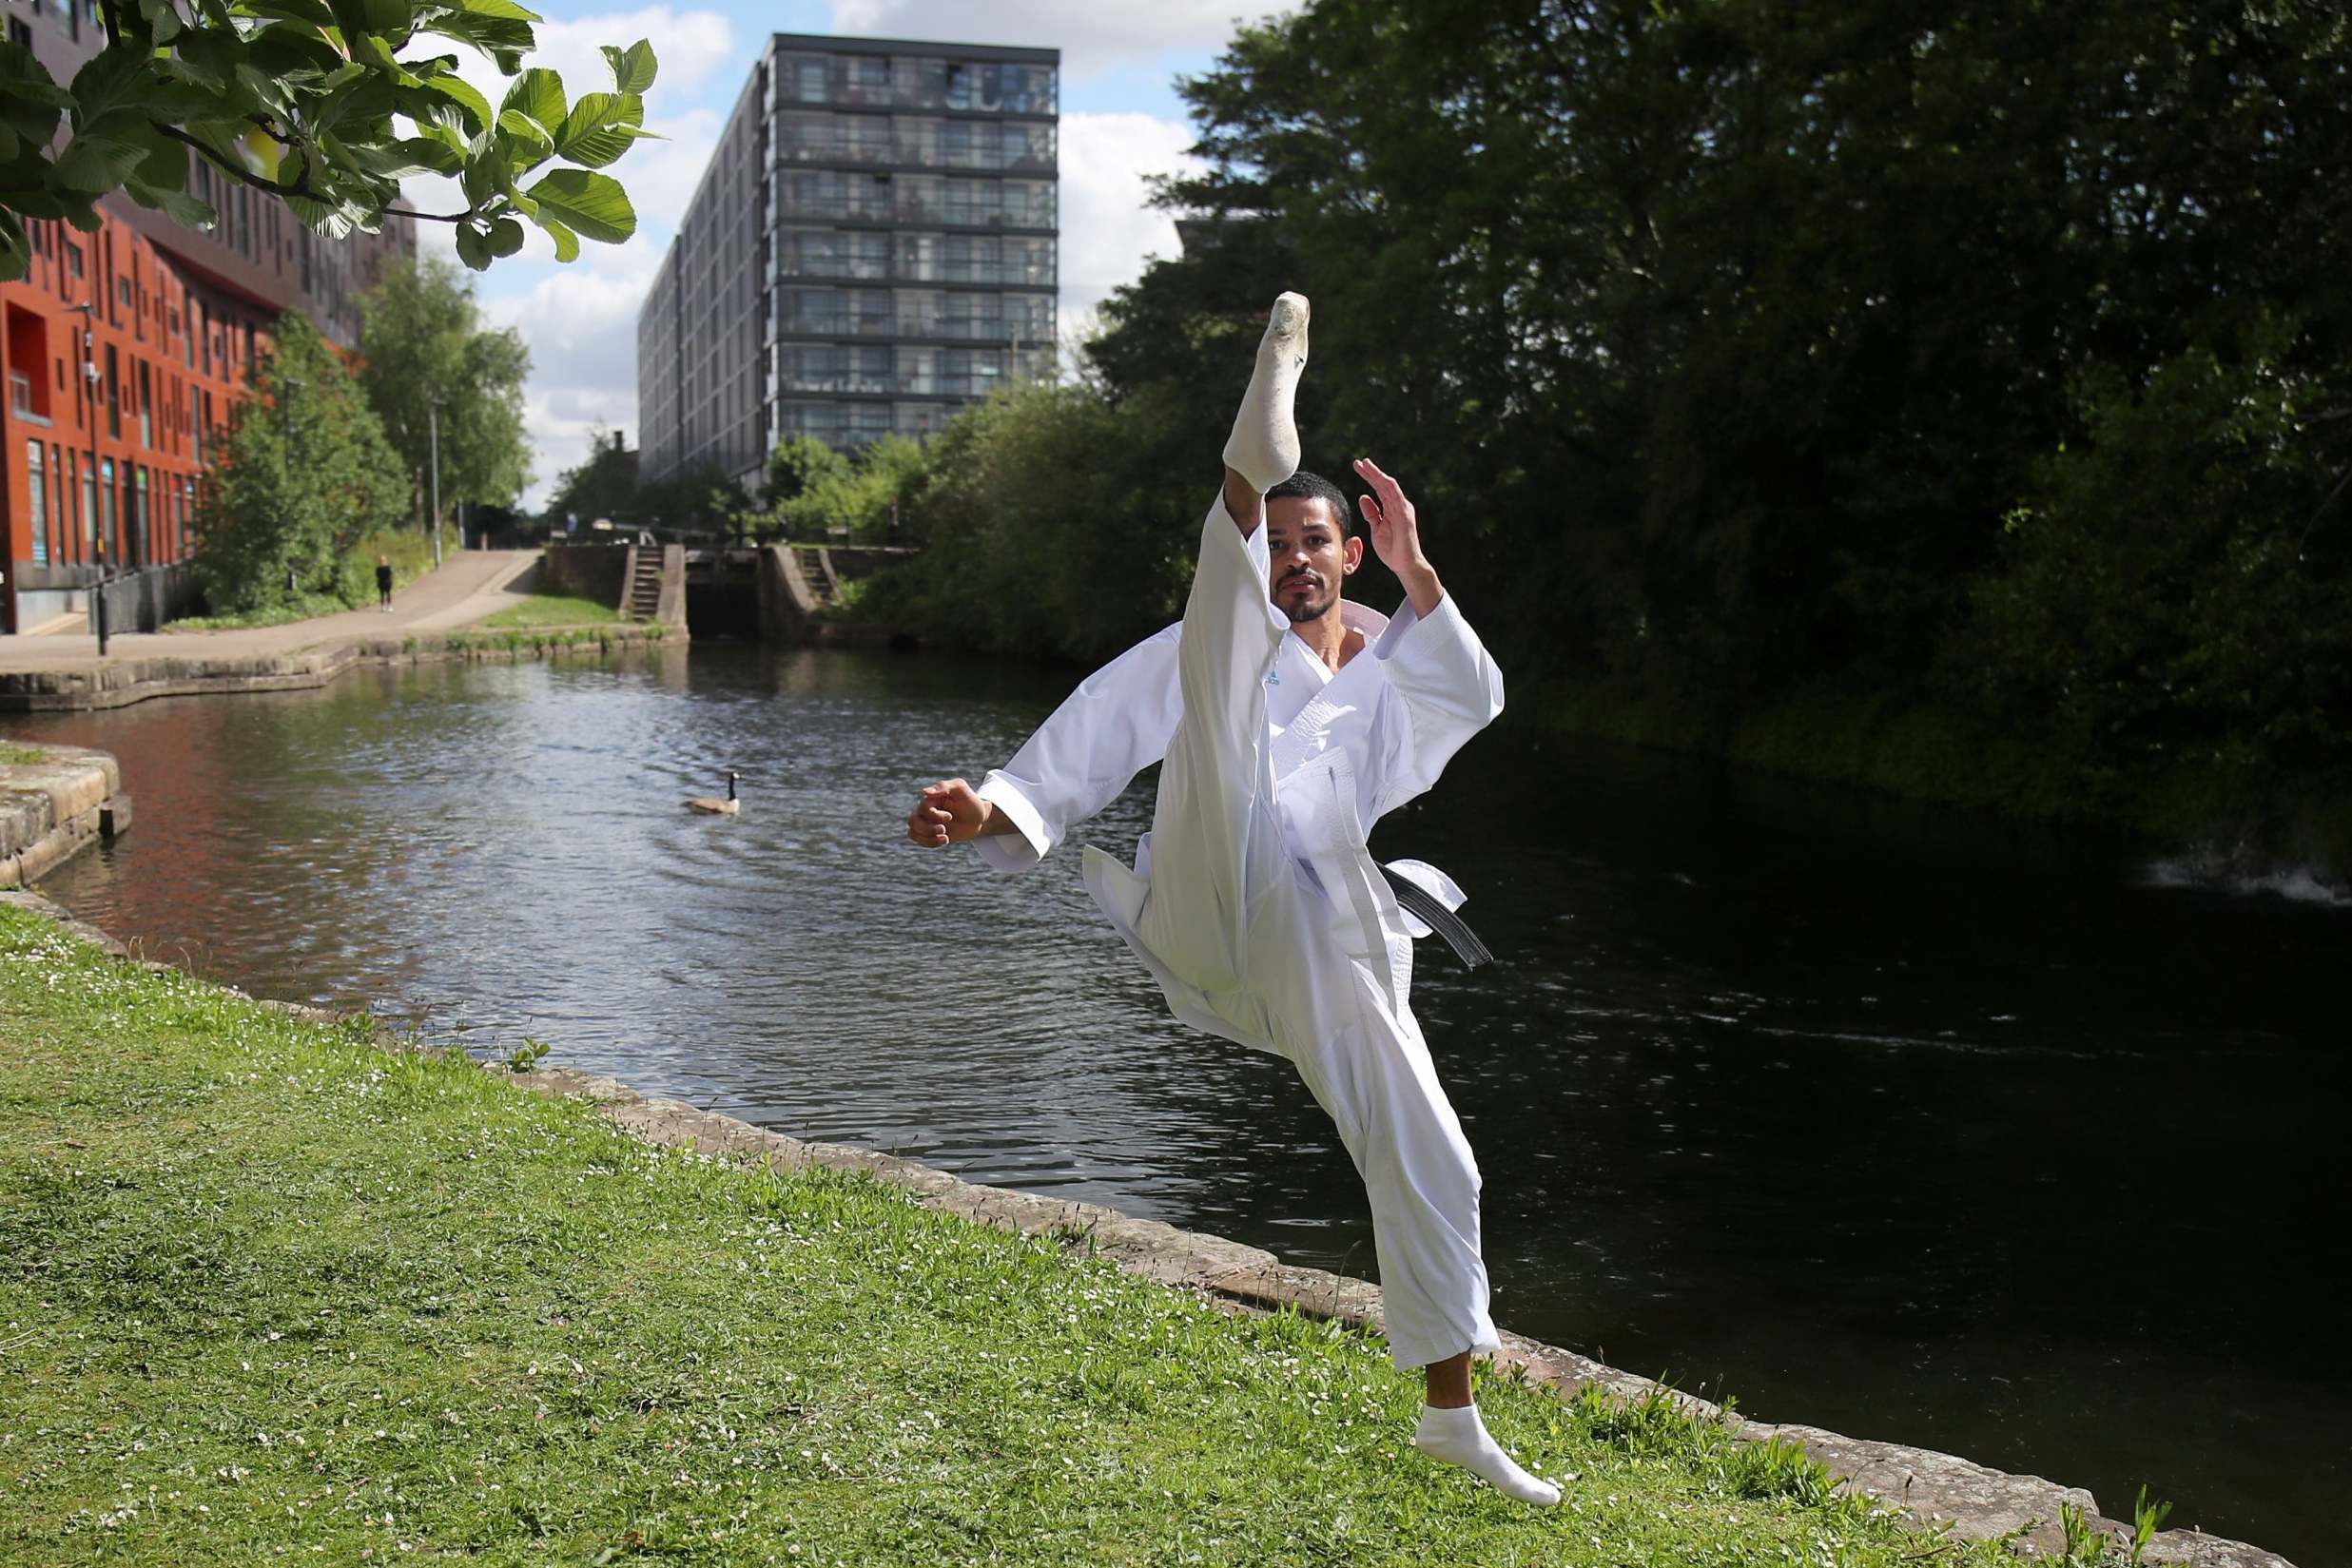 Team GB’s karate athlete Jordan Thomas trains outside his apartment in Manchester